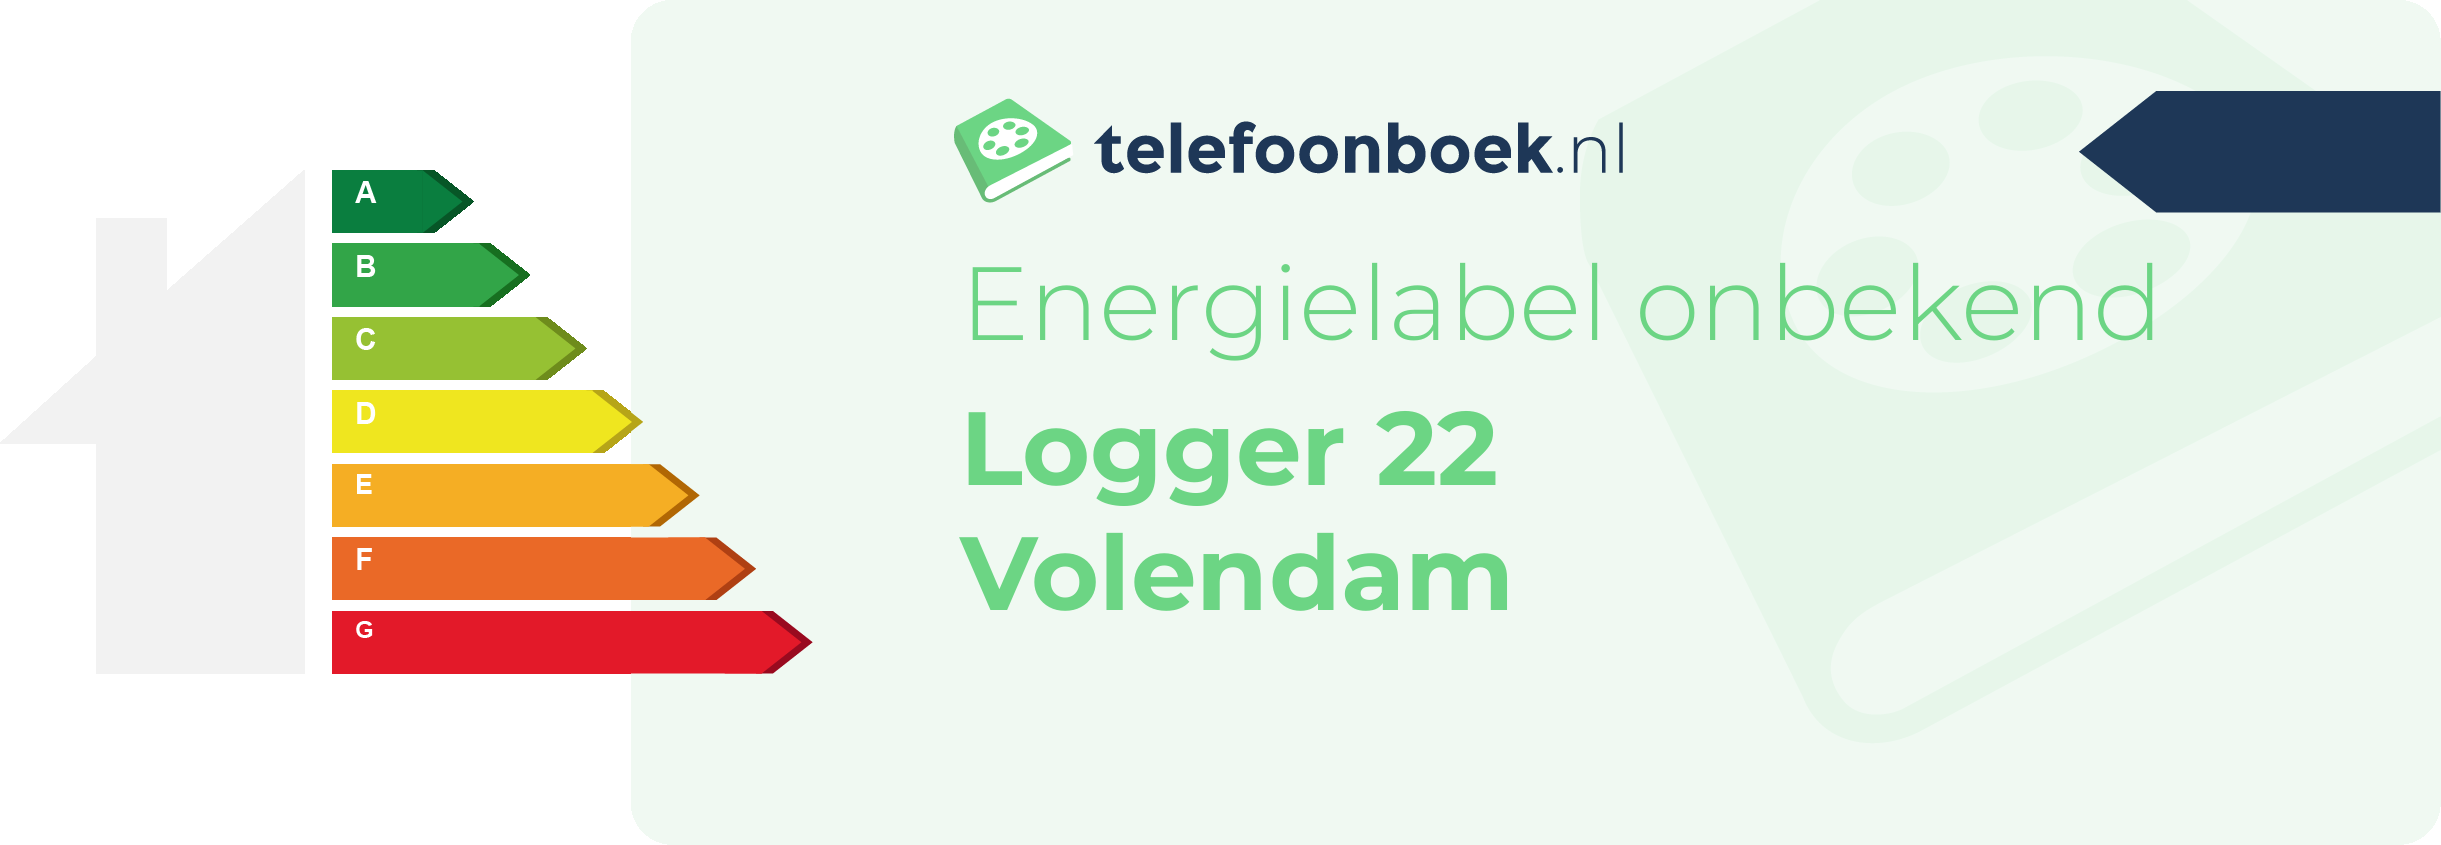 Energielabel Logger 22 Volendam